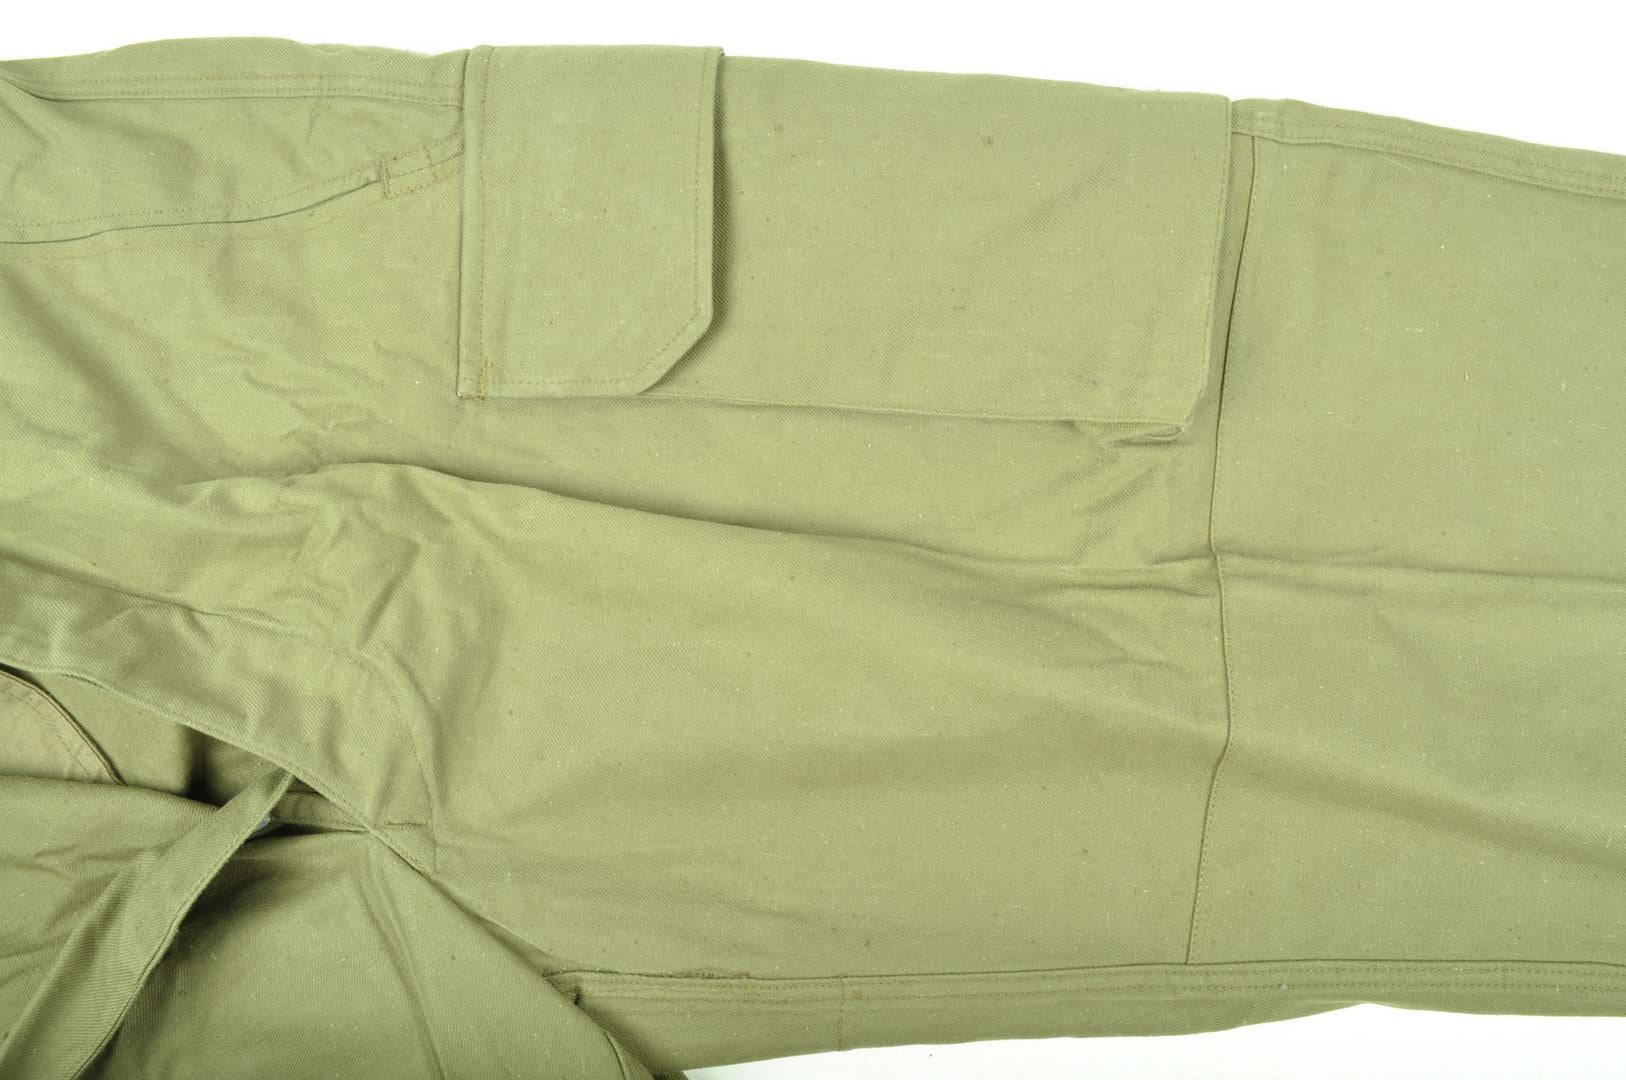 Pantalon TTA 47-53 fabrication Allemande / daté 54